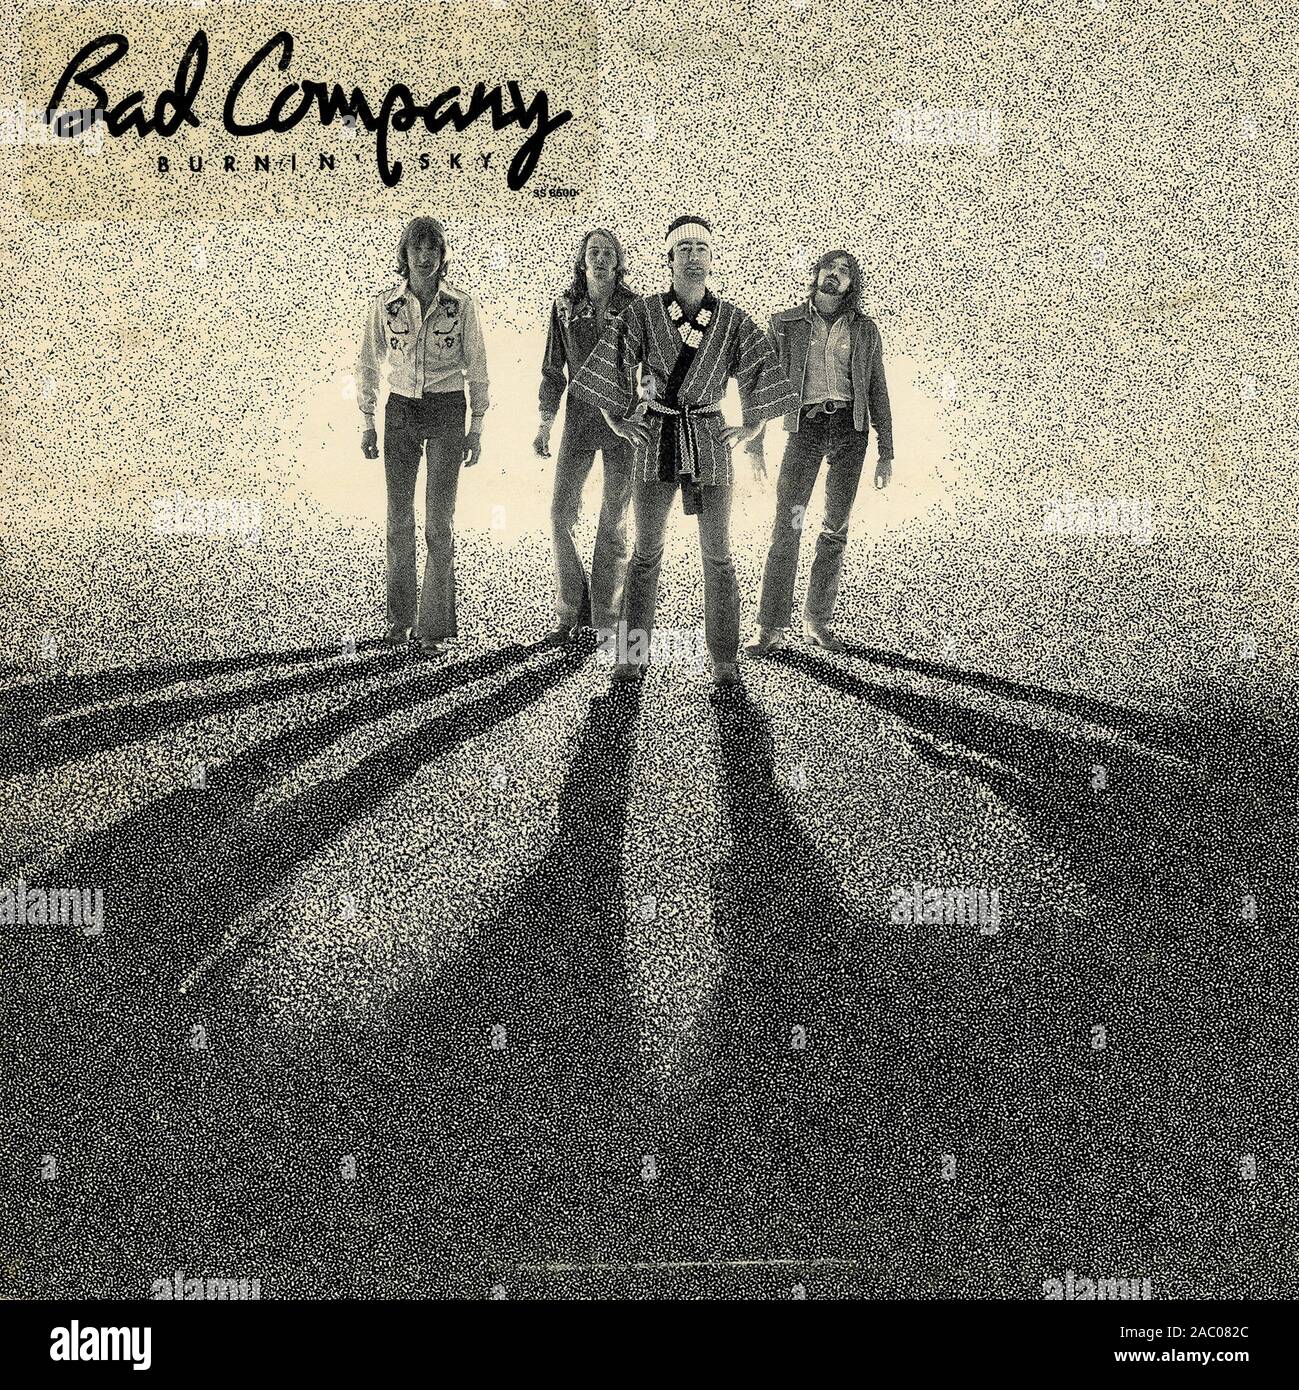 Bad Company - Vintage vinile copertina album Foto stock - Alamy